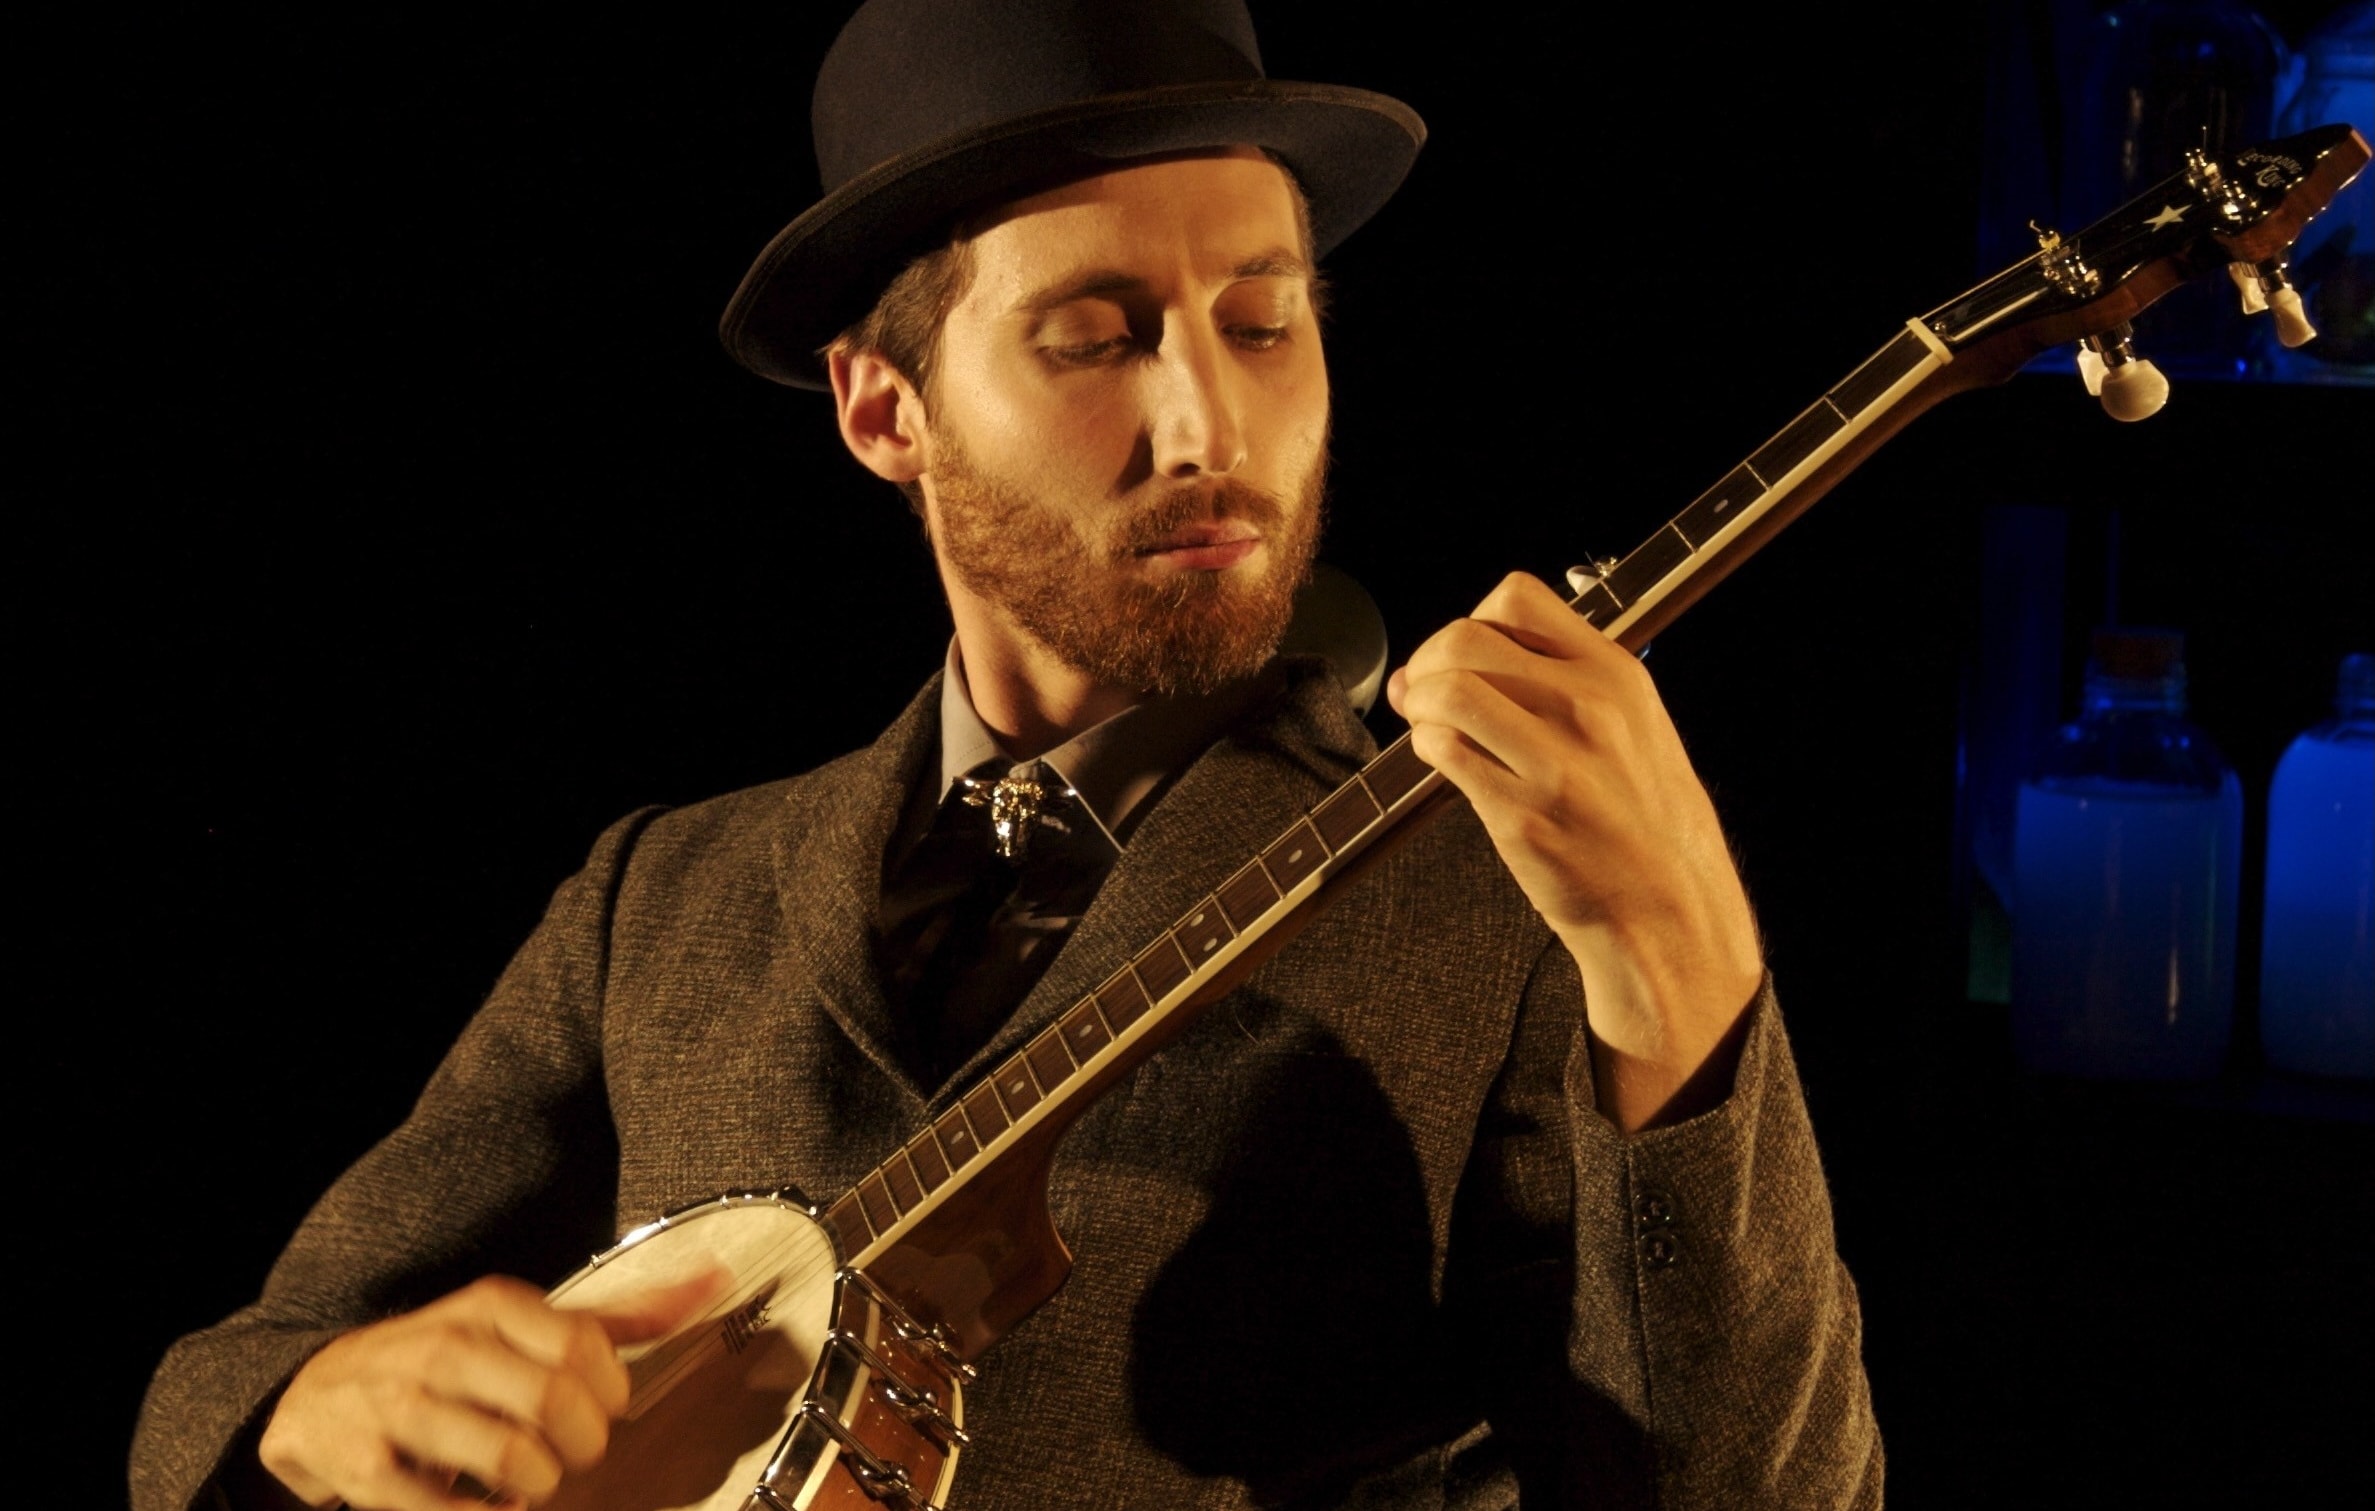 Musician and composer David Ward plays the banjo